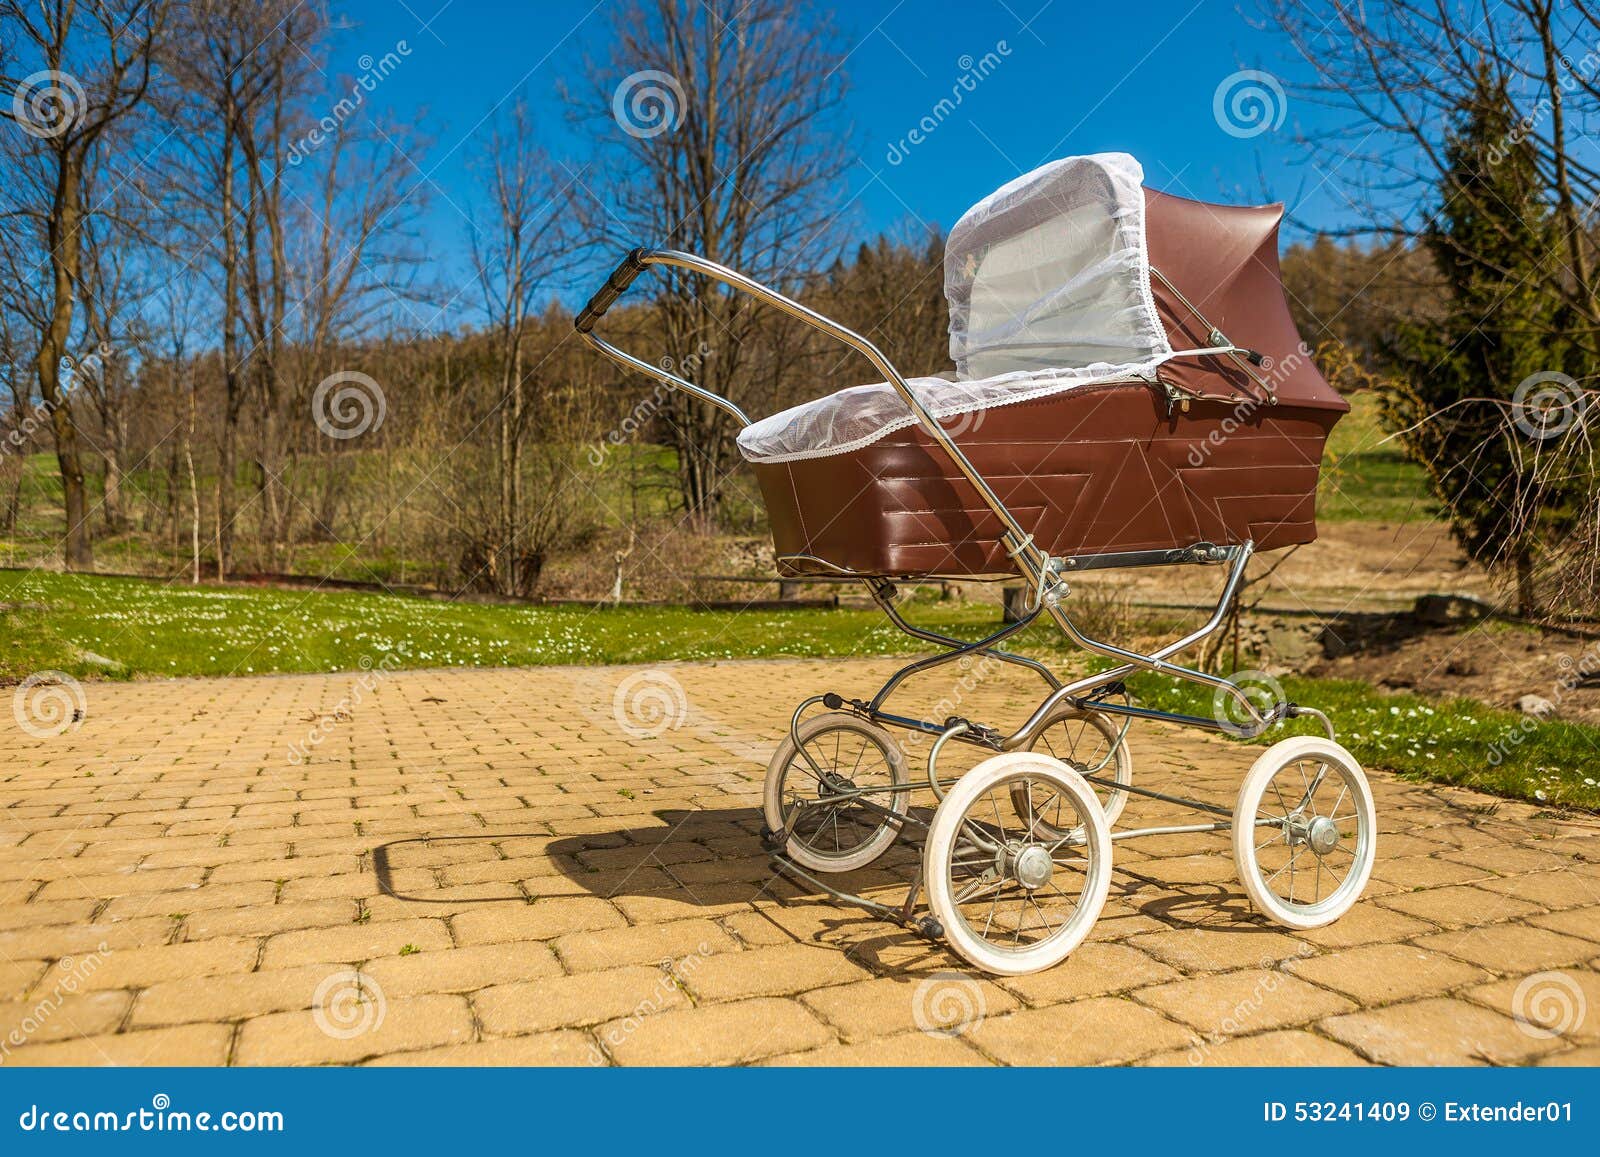 vintage style baby stroller